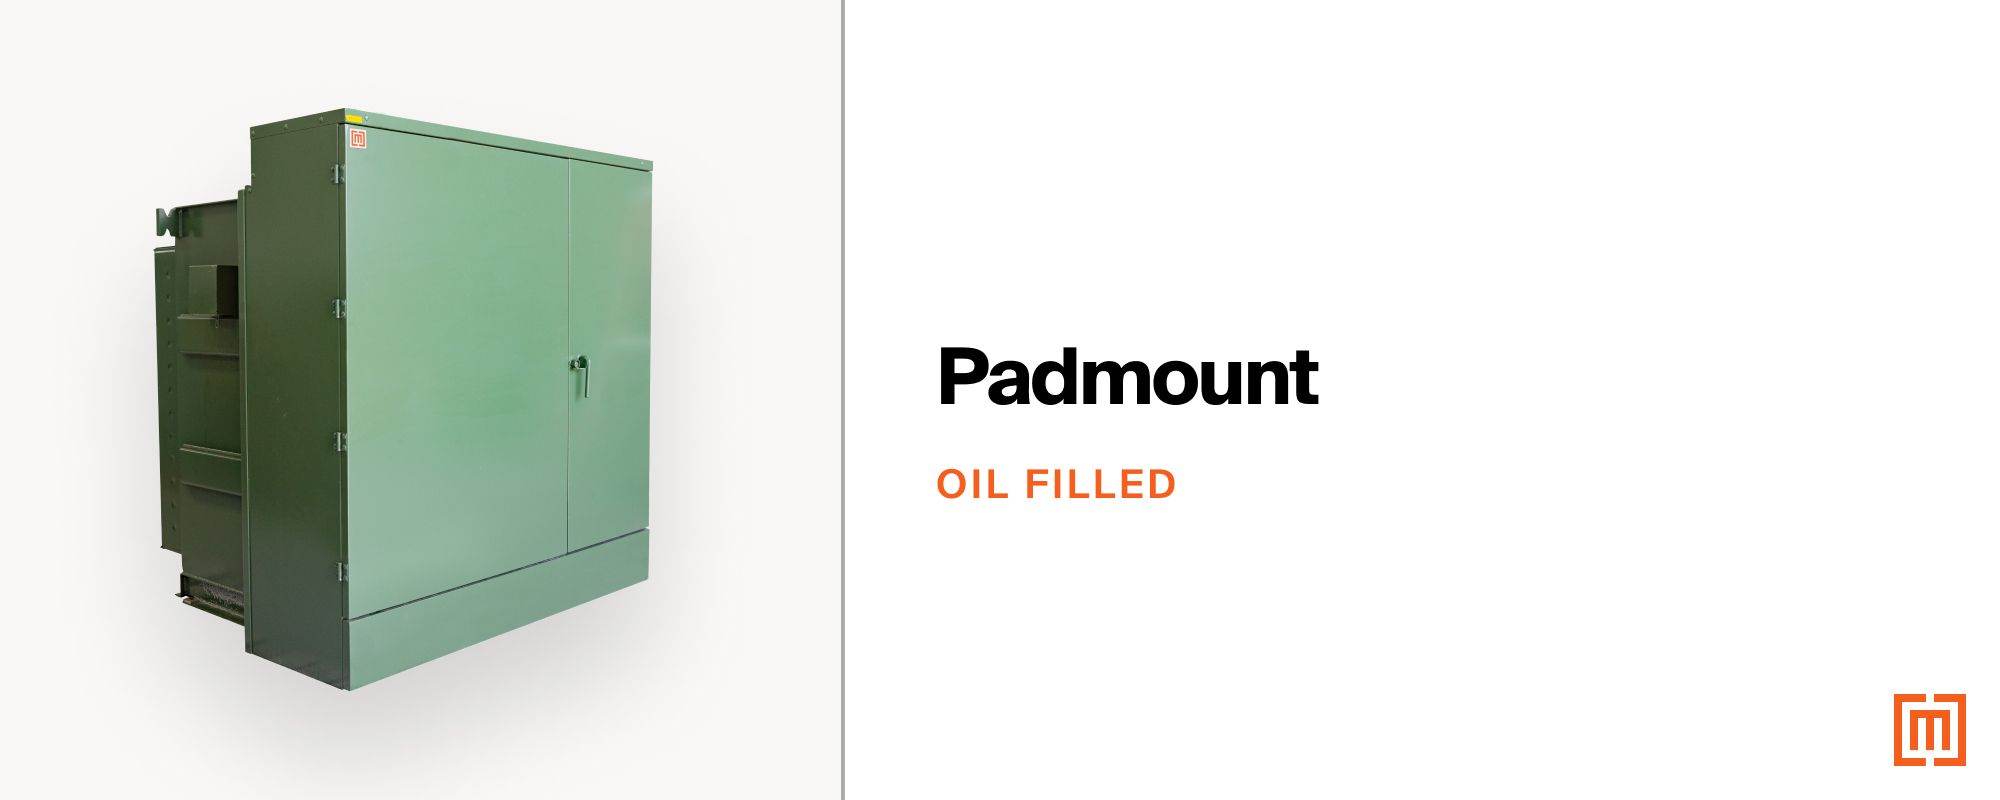 A green Maddox oil filled padmount transformer